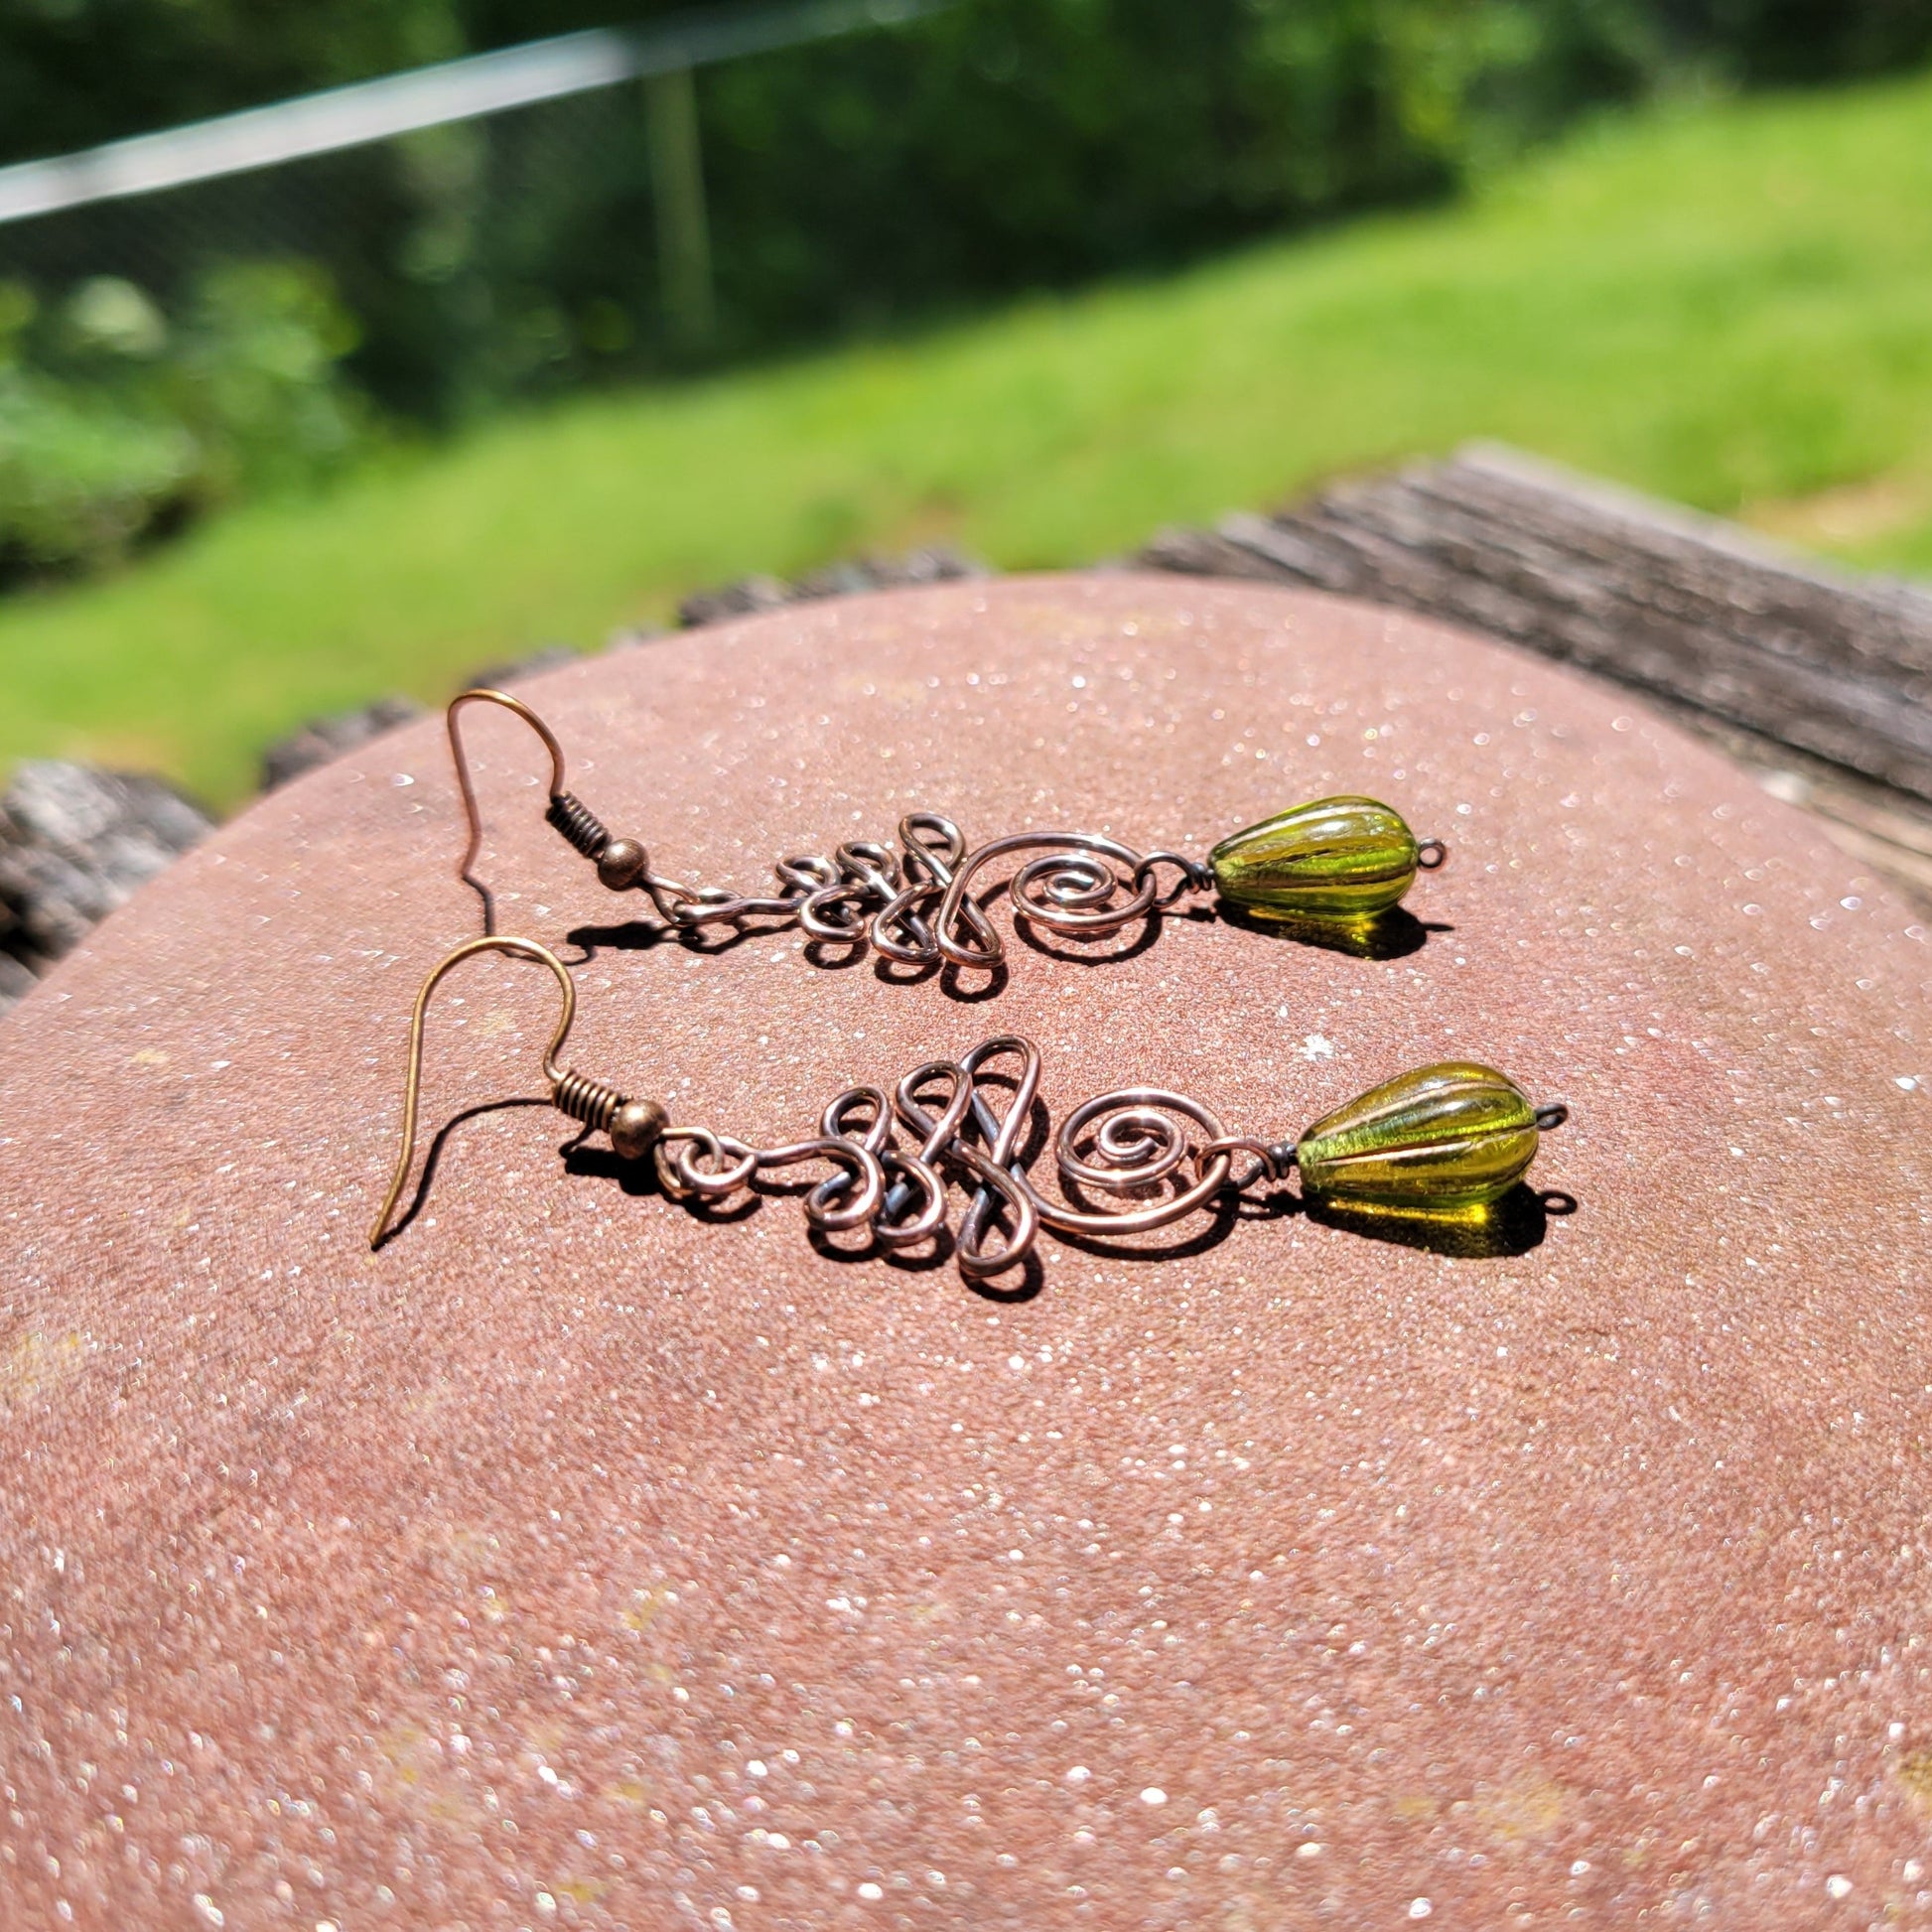 Love My Art Jewelry: Nichrome Wire In Ceramic Beads